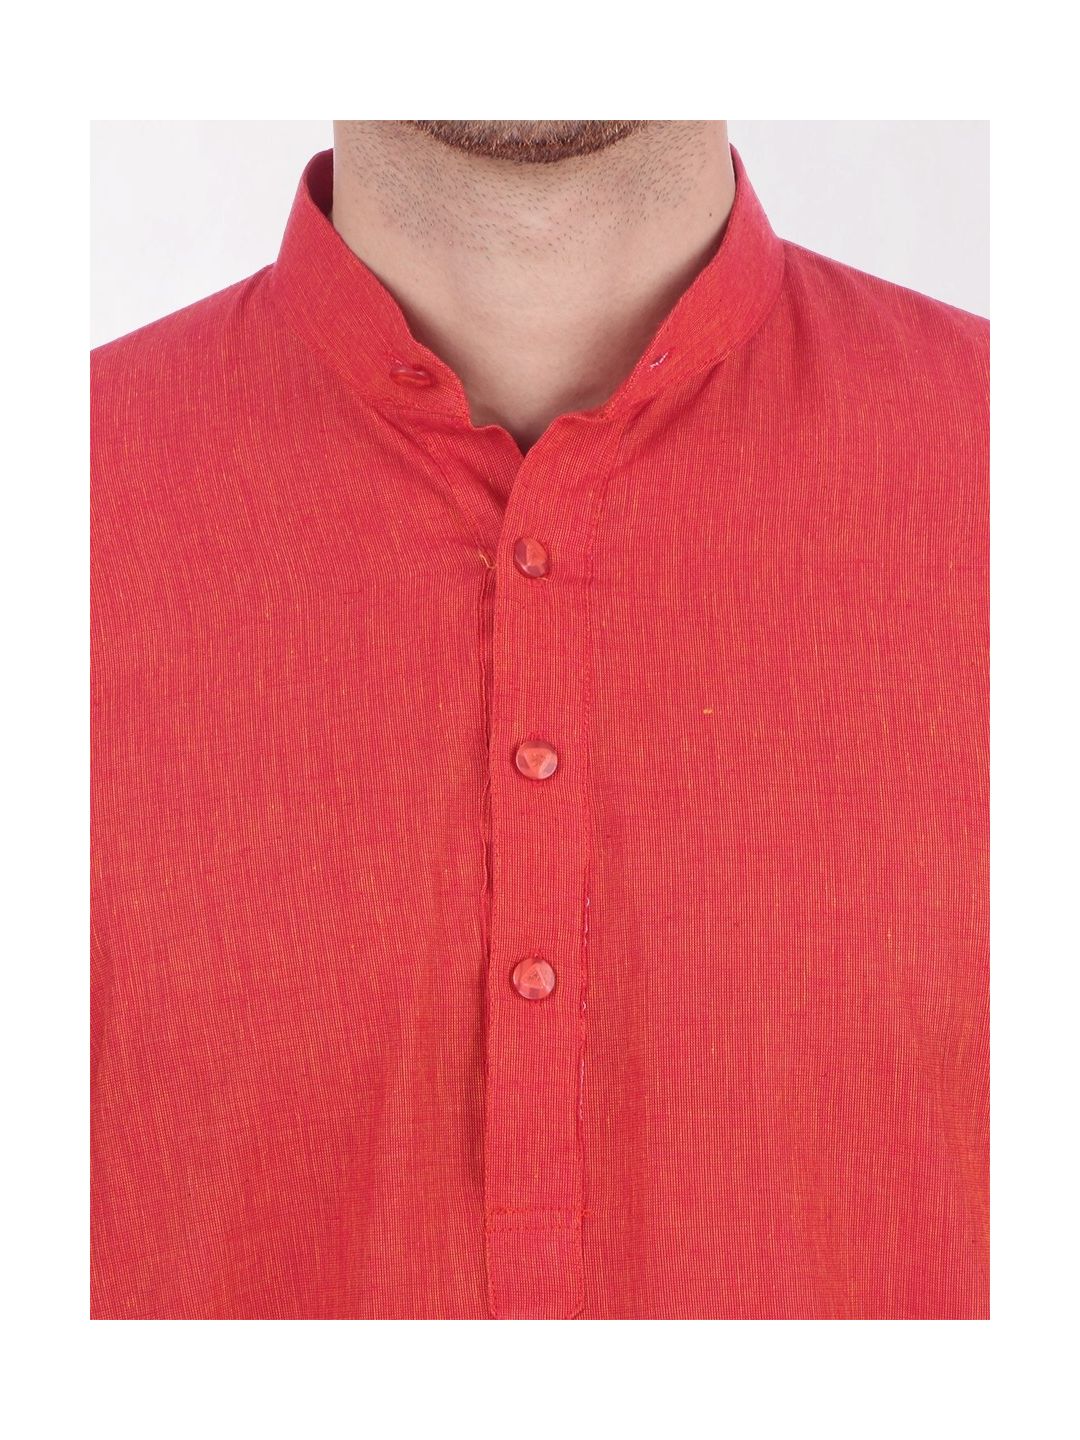 Red Handloom Cotton Kurta